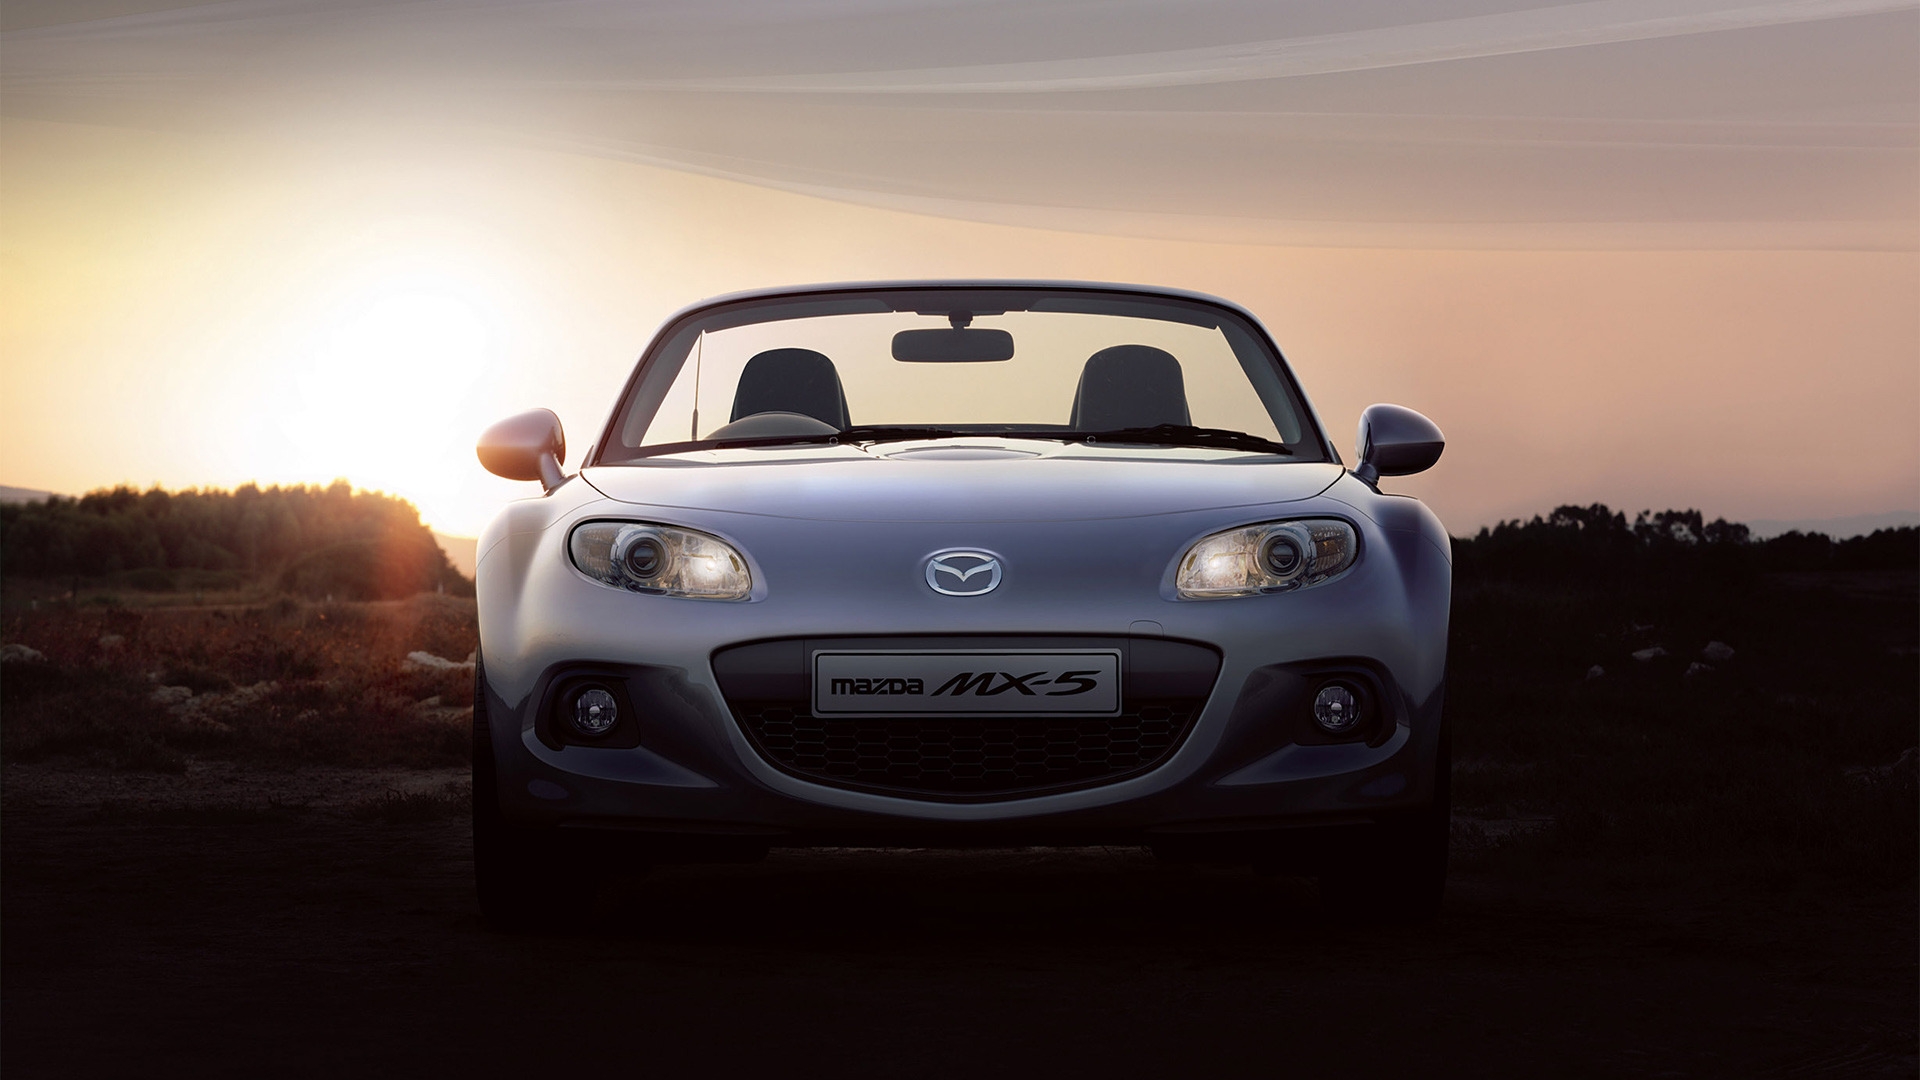 2013 Mazda MX 5 Roadster for 1920 x 1080 HDTV 1080p resolution